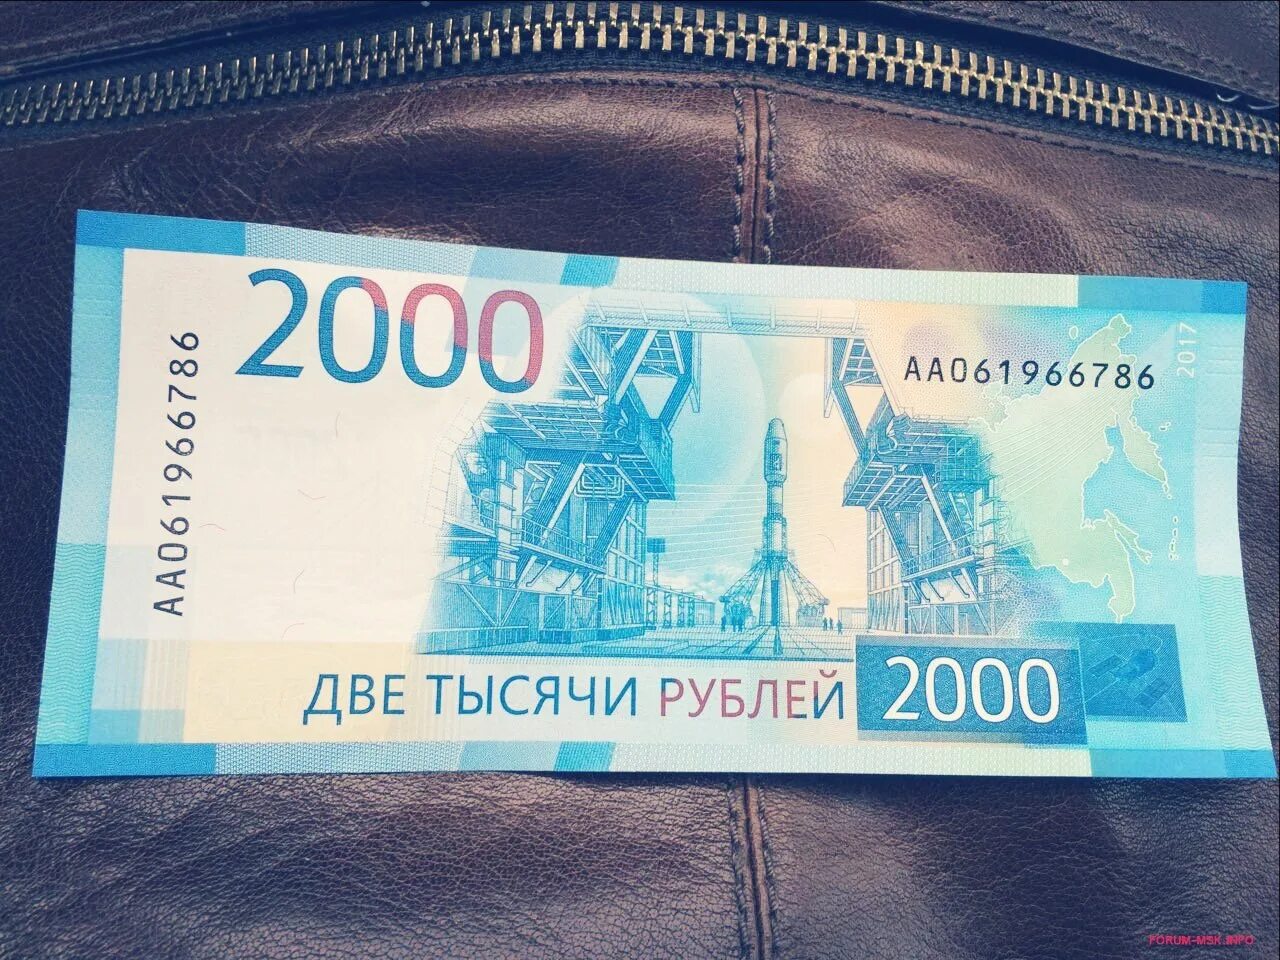 Производство 2000 руб. Купюра 2000 рублей. 2000 Тысячи рублей купюра. 1000 Рублей и 2000 рублей. Две тысячи рублей купюра.